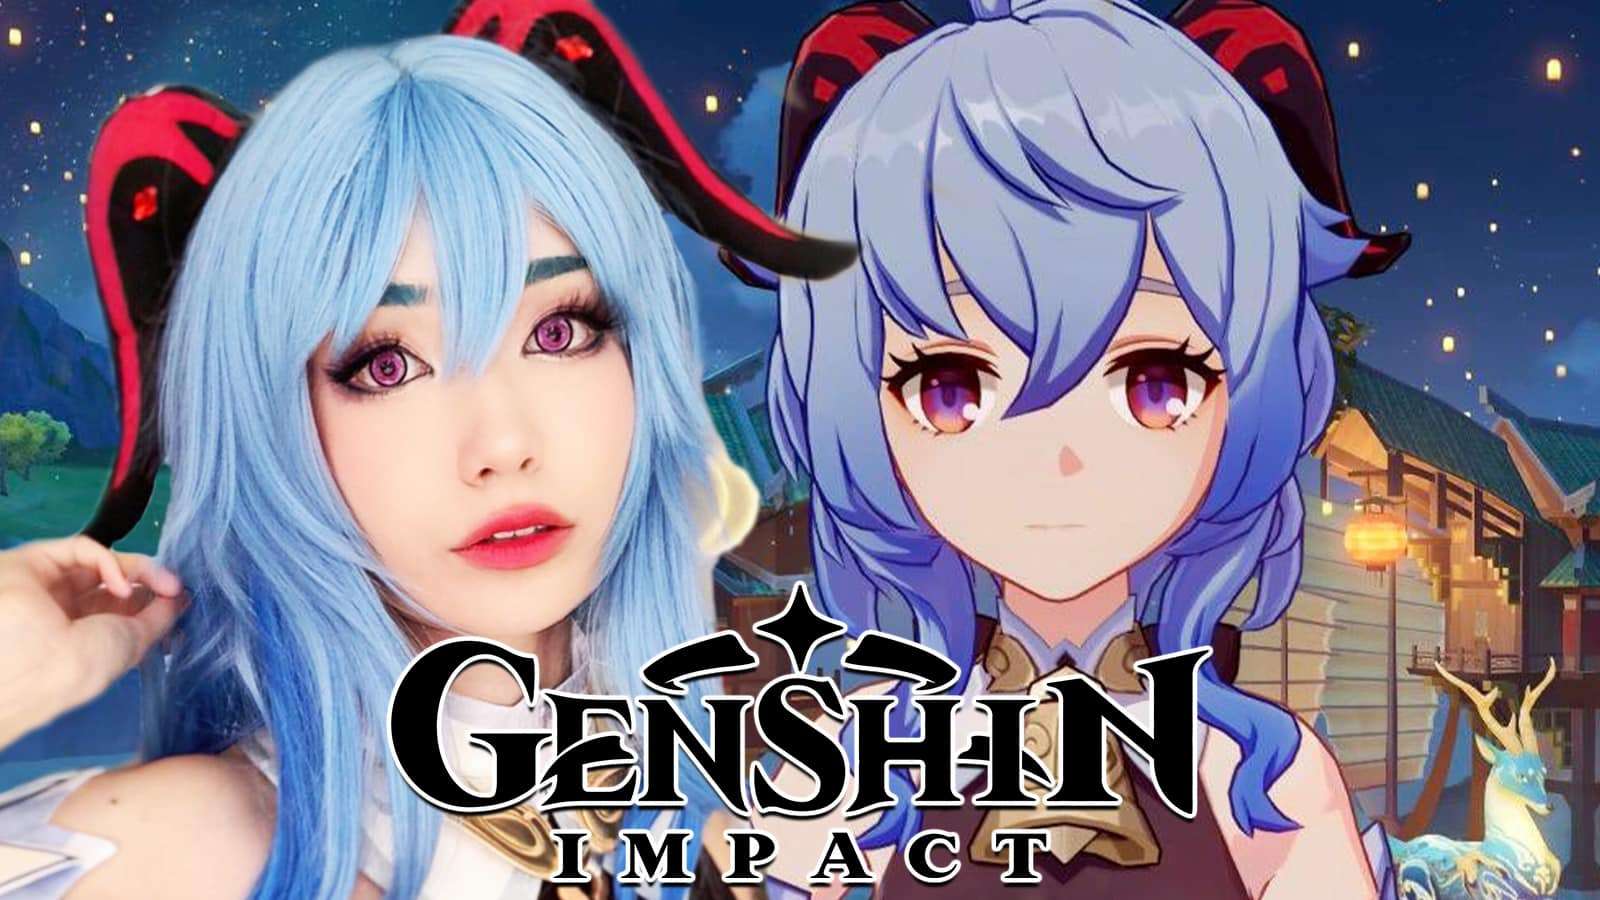 Twitch streamer Emiru next to Genshin Impact's Ganyu